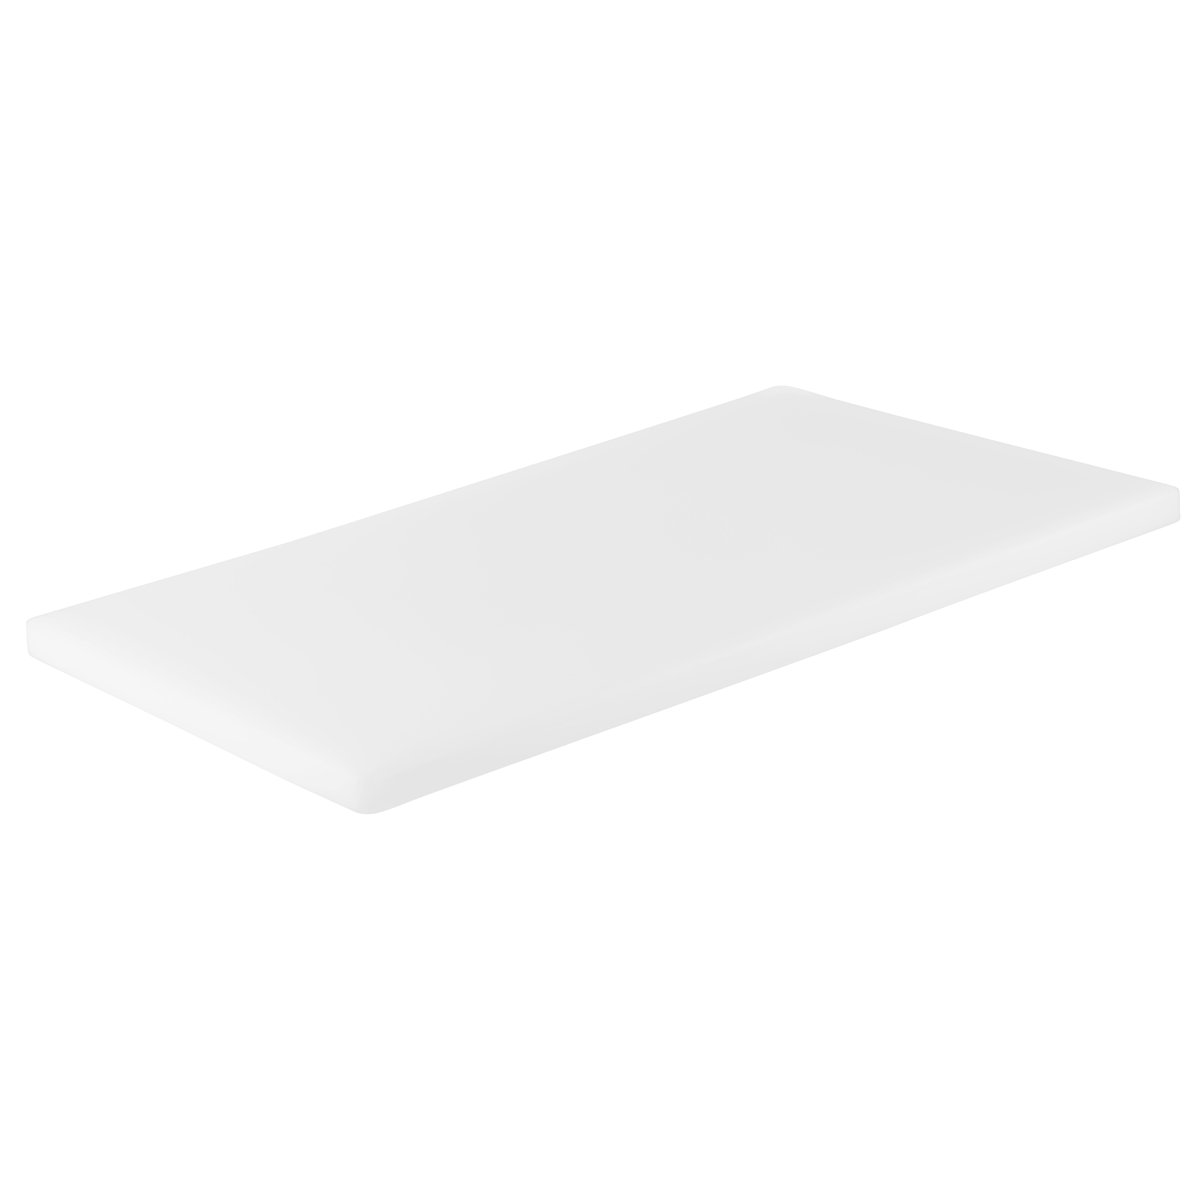 04363 Chef Inox Cutting Board Polyethylene White 450x750x19mm Tomkin Australia Hospitality Supplies